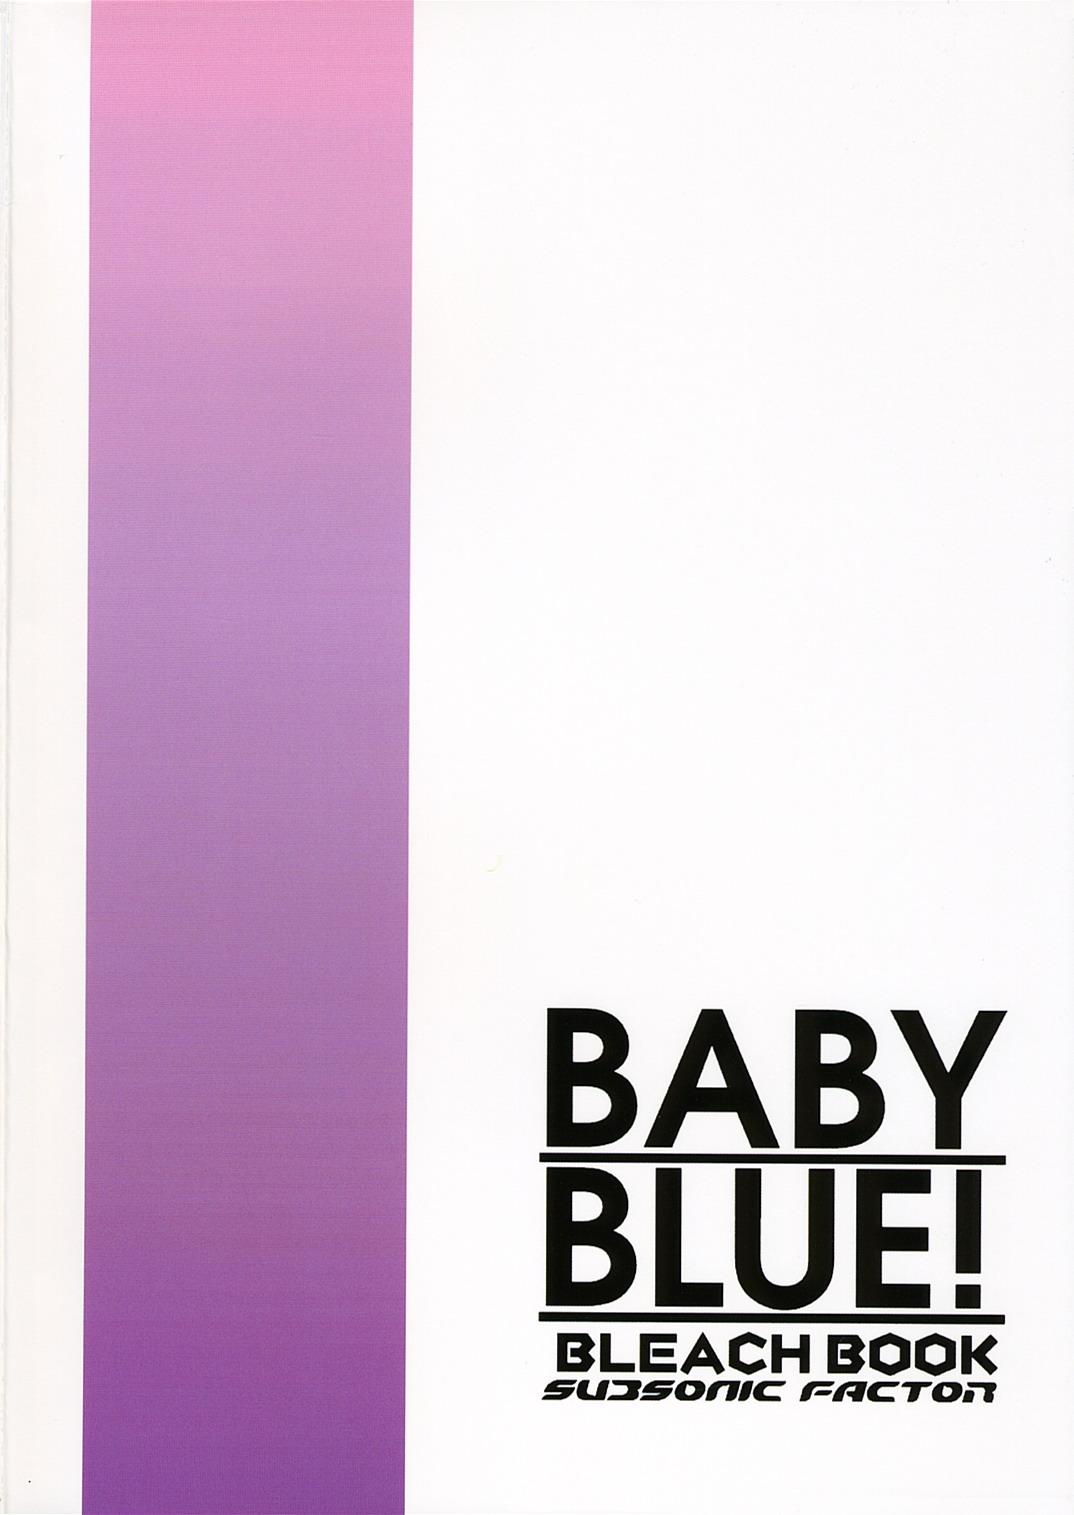 BABY BLUE! 33